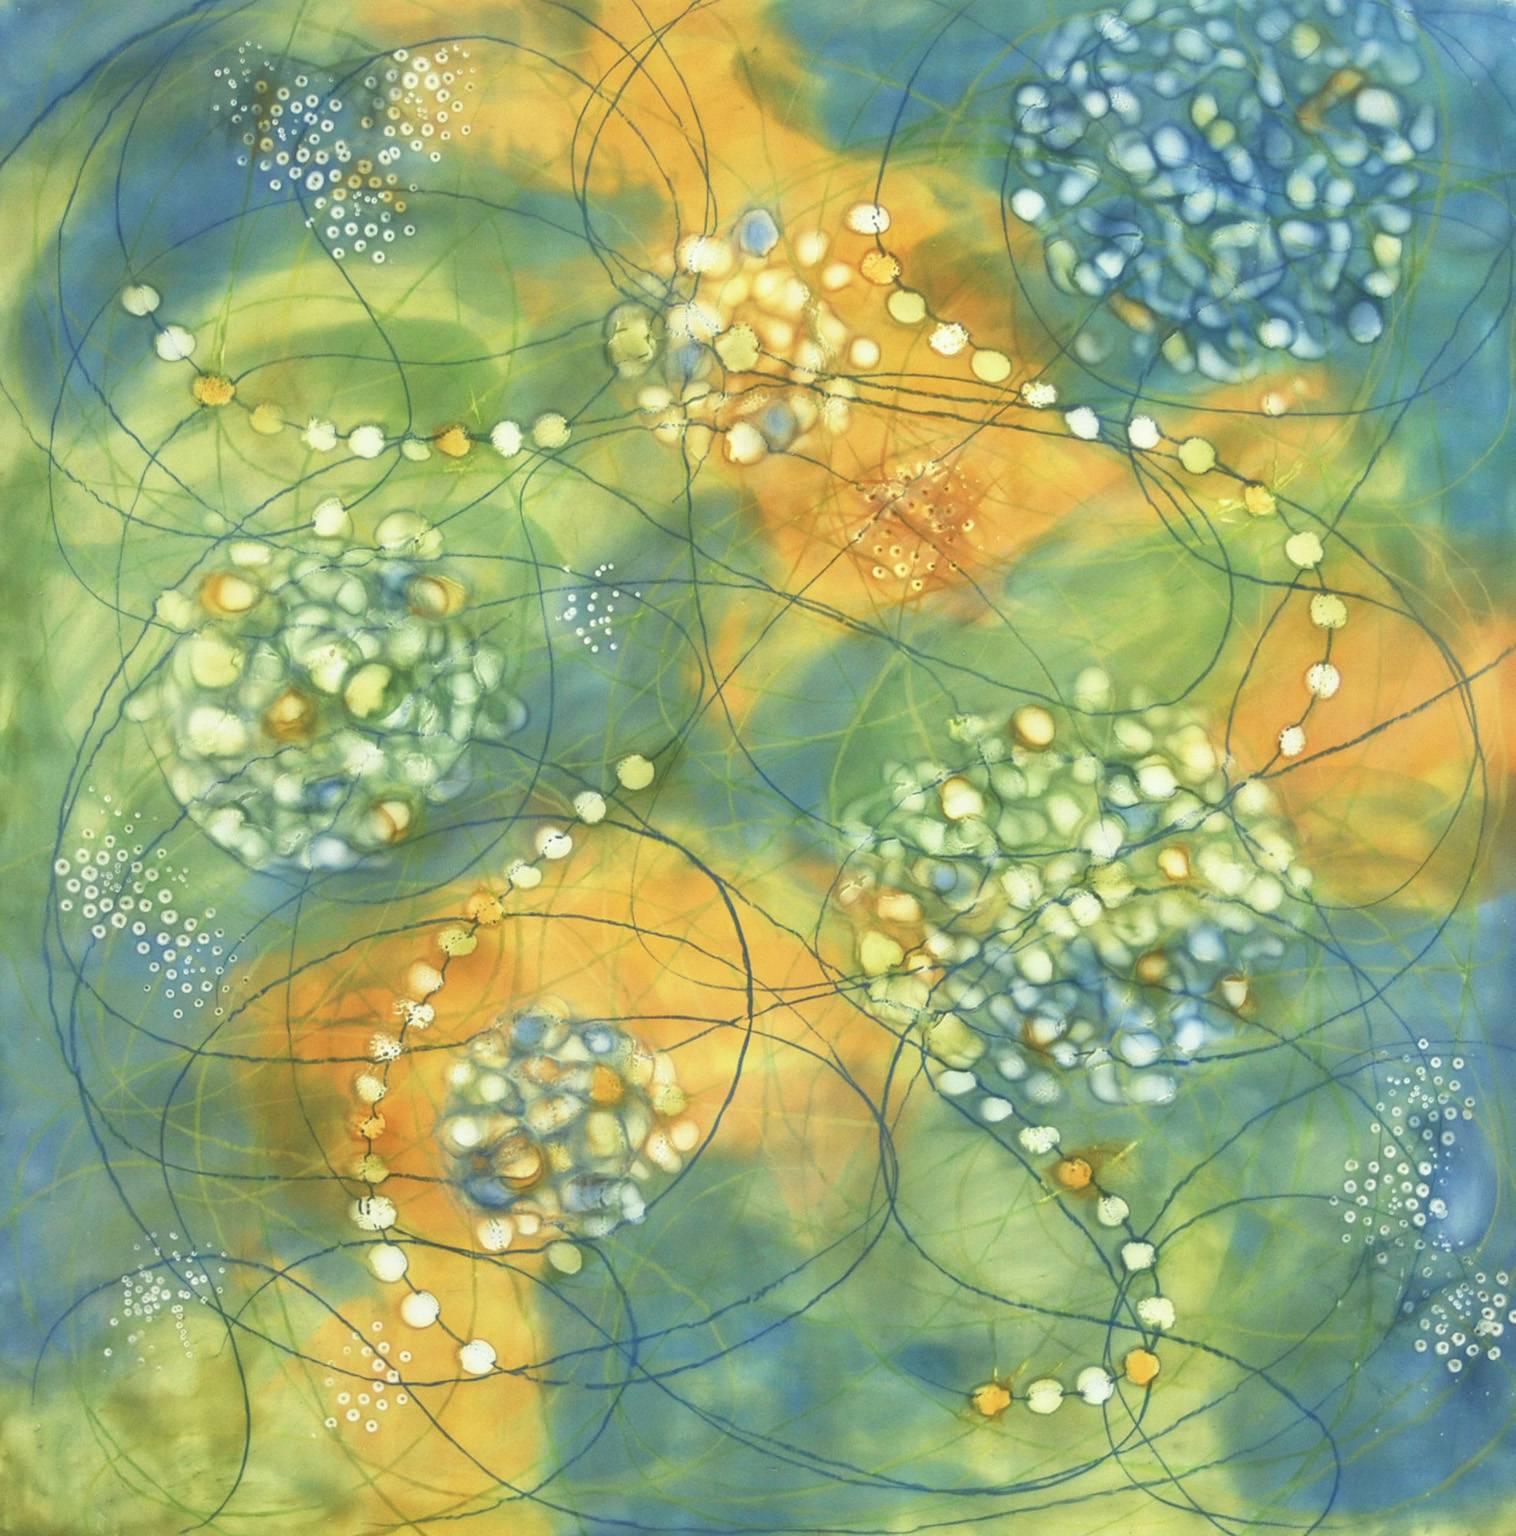 "Bio Fusion 15", encaustic, pastel, abstract, microscopic, teal, green, orange